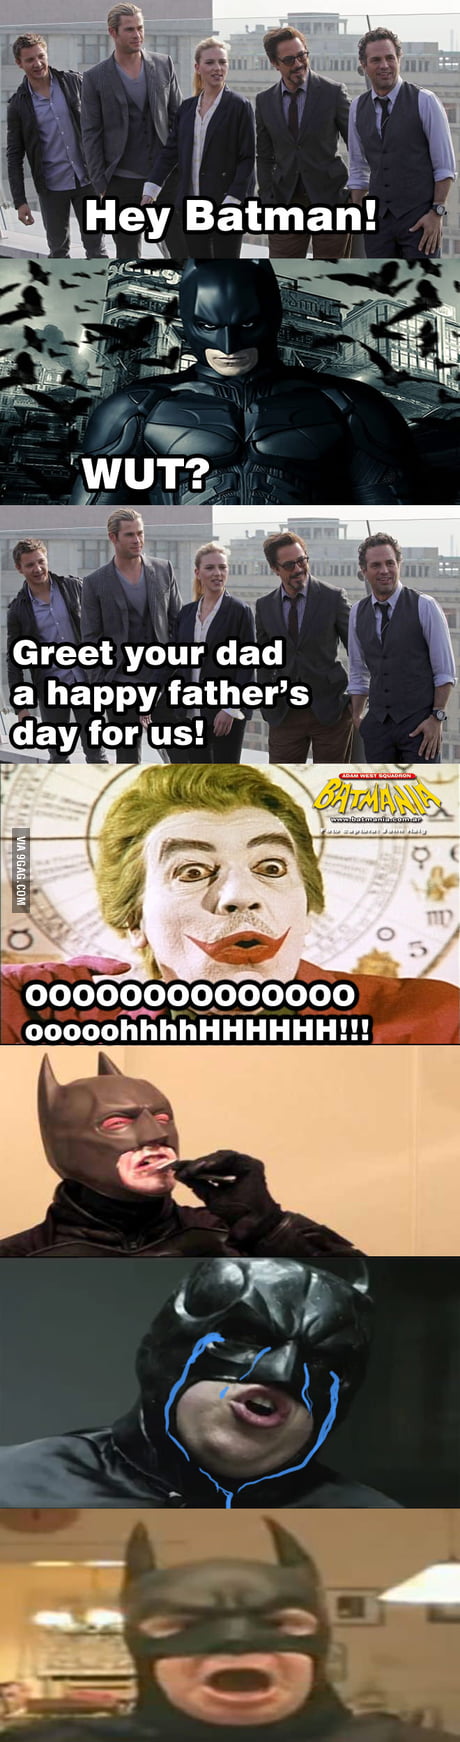 Happy father's day Batman! - 9GAG